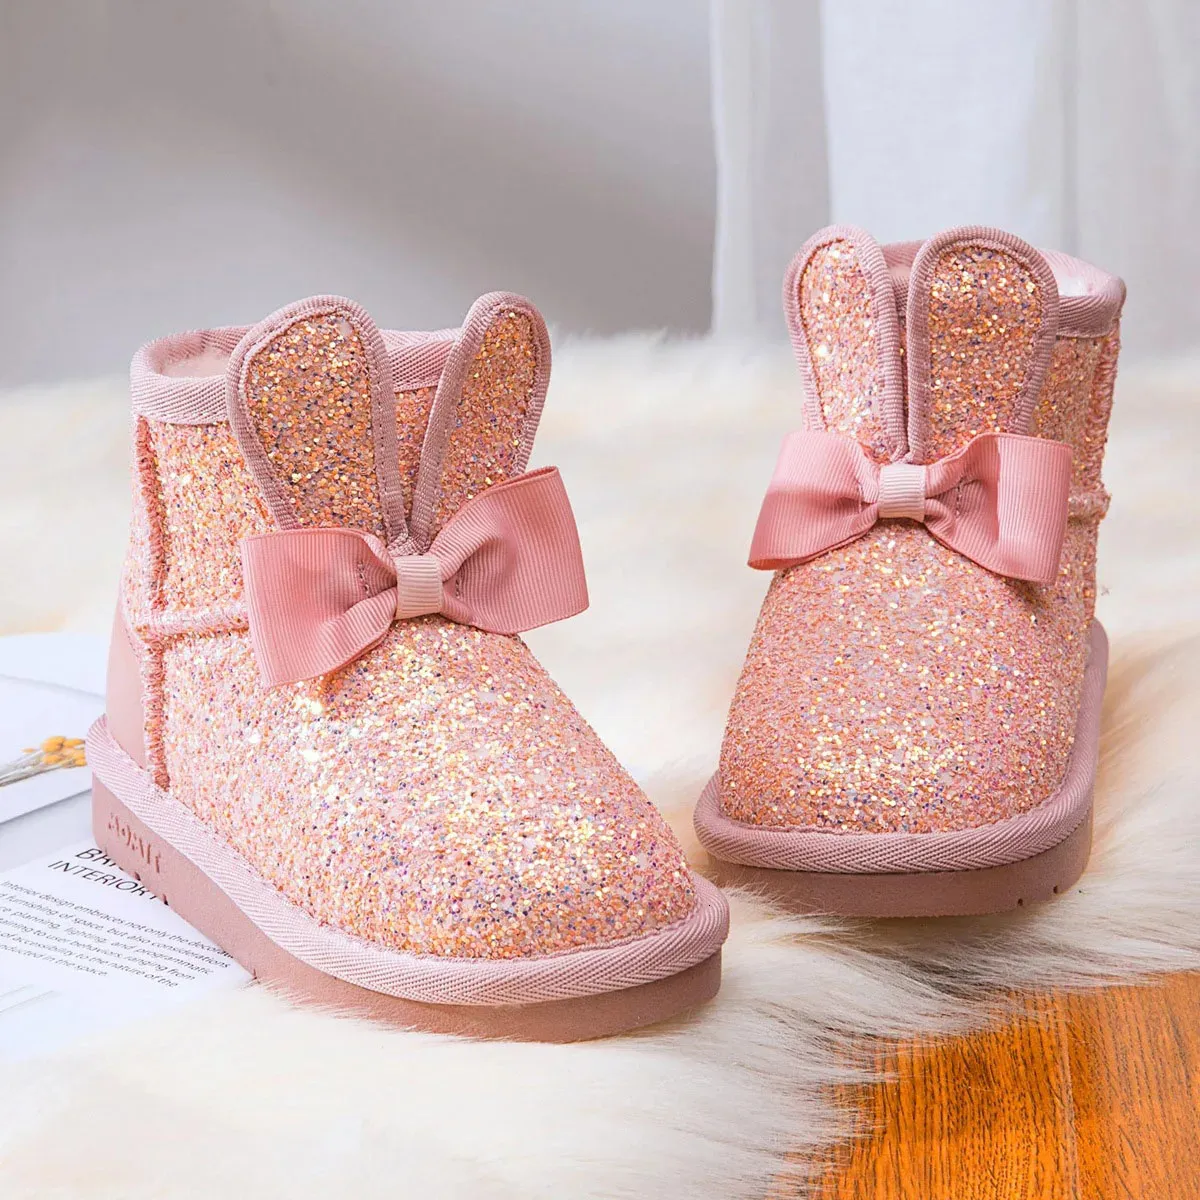 Boots Children S Snow Boots Girls Rabbit päls varma baby bomullssportskor paljetter äkta läder prinsessor mode 231030